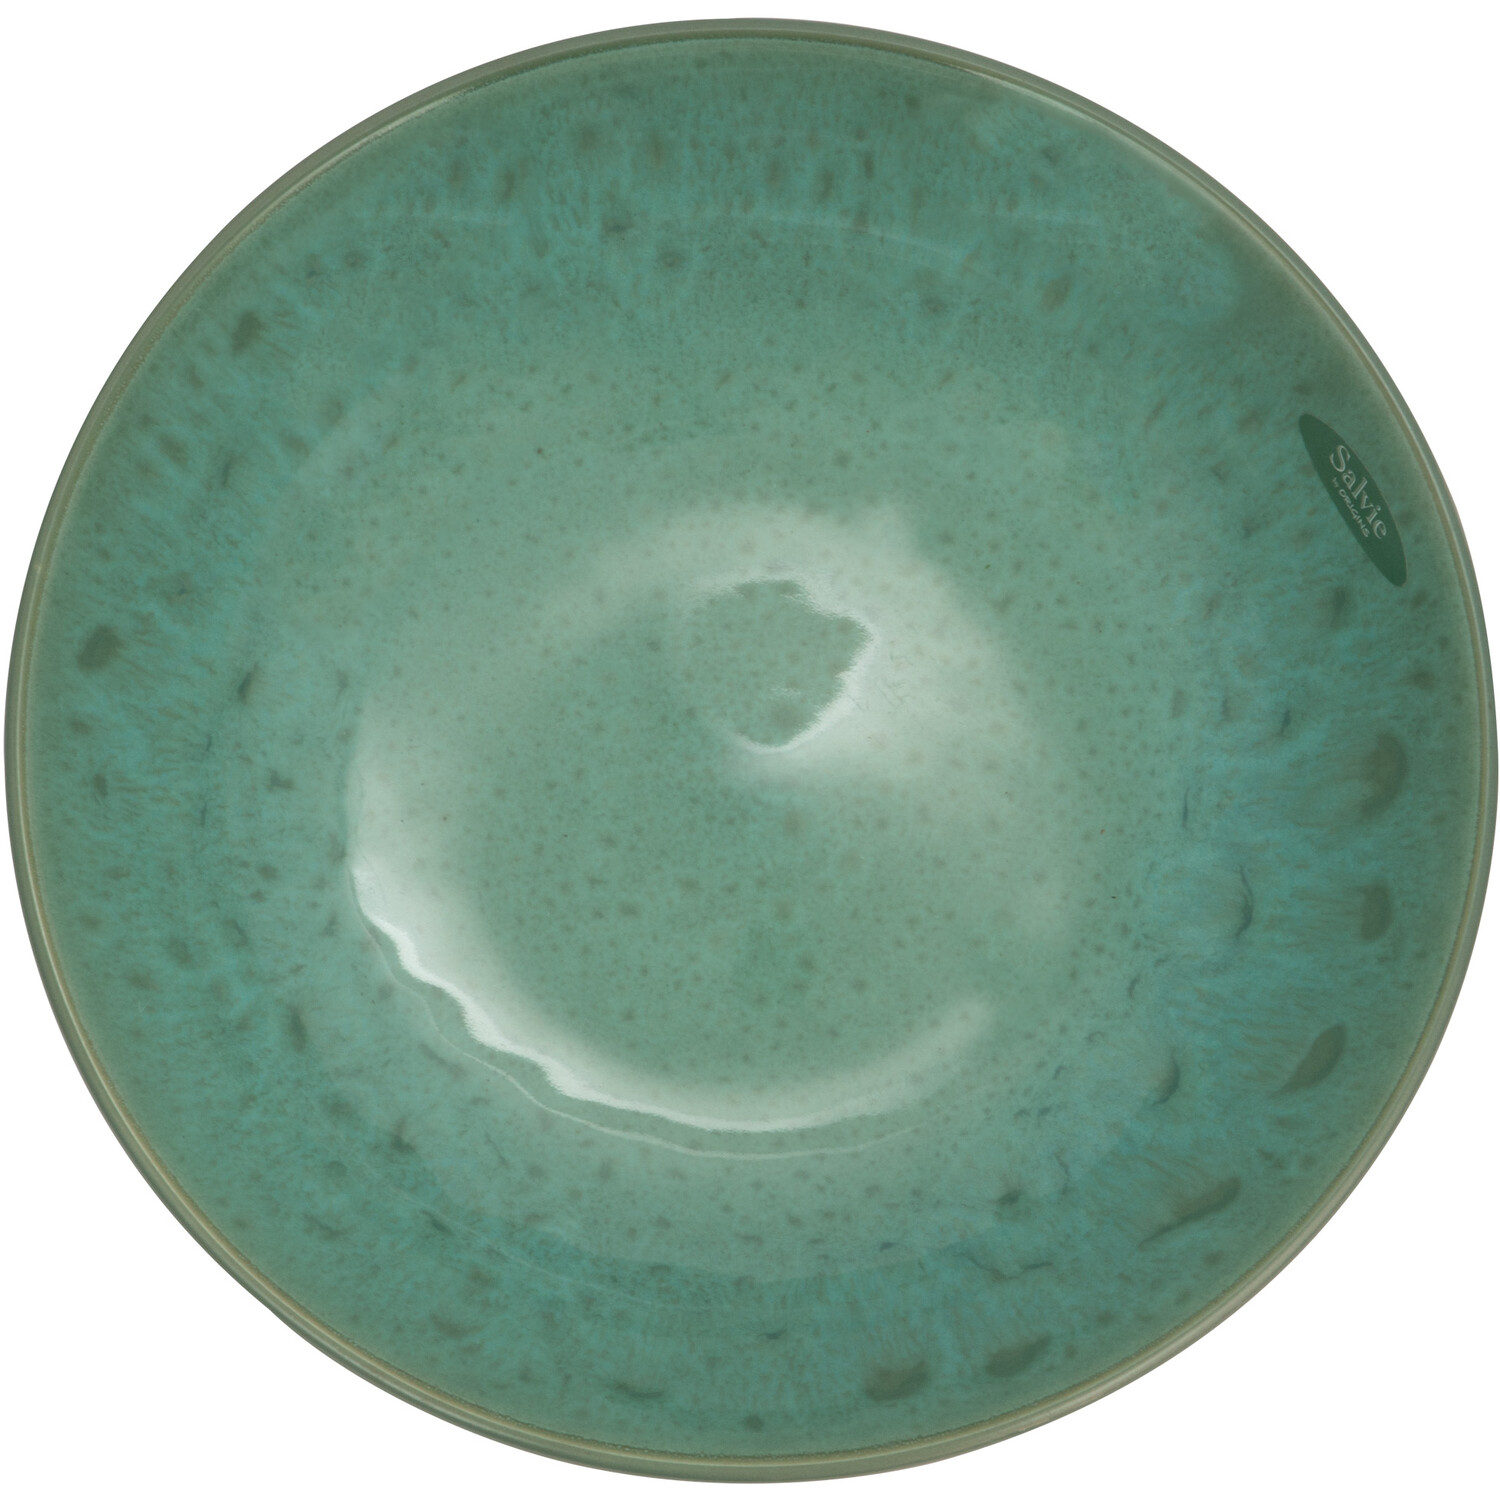 Salvie Reactive Glaze Serving Bowl - Green Image 2